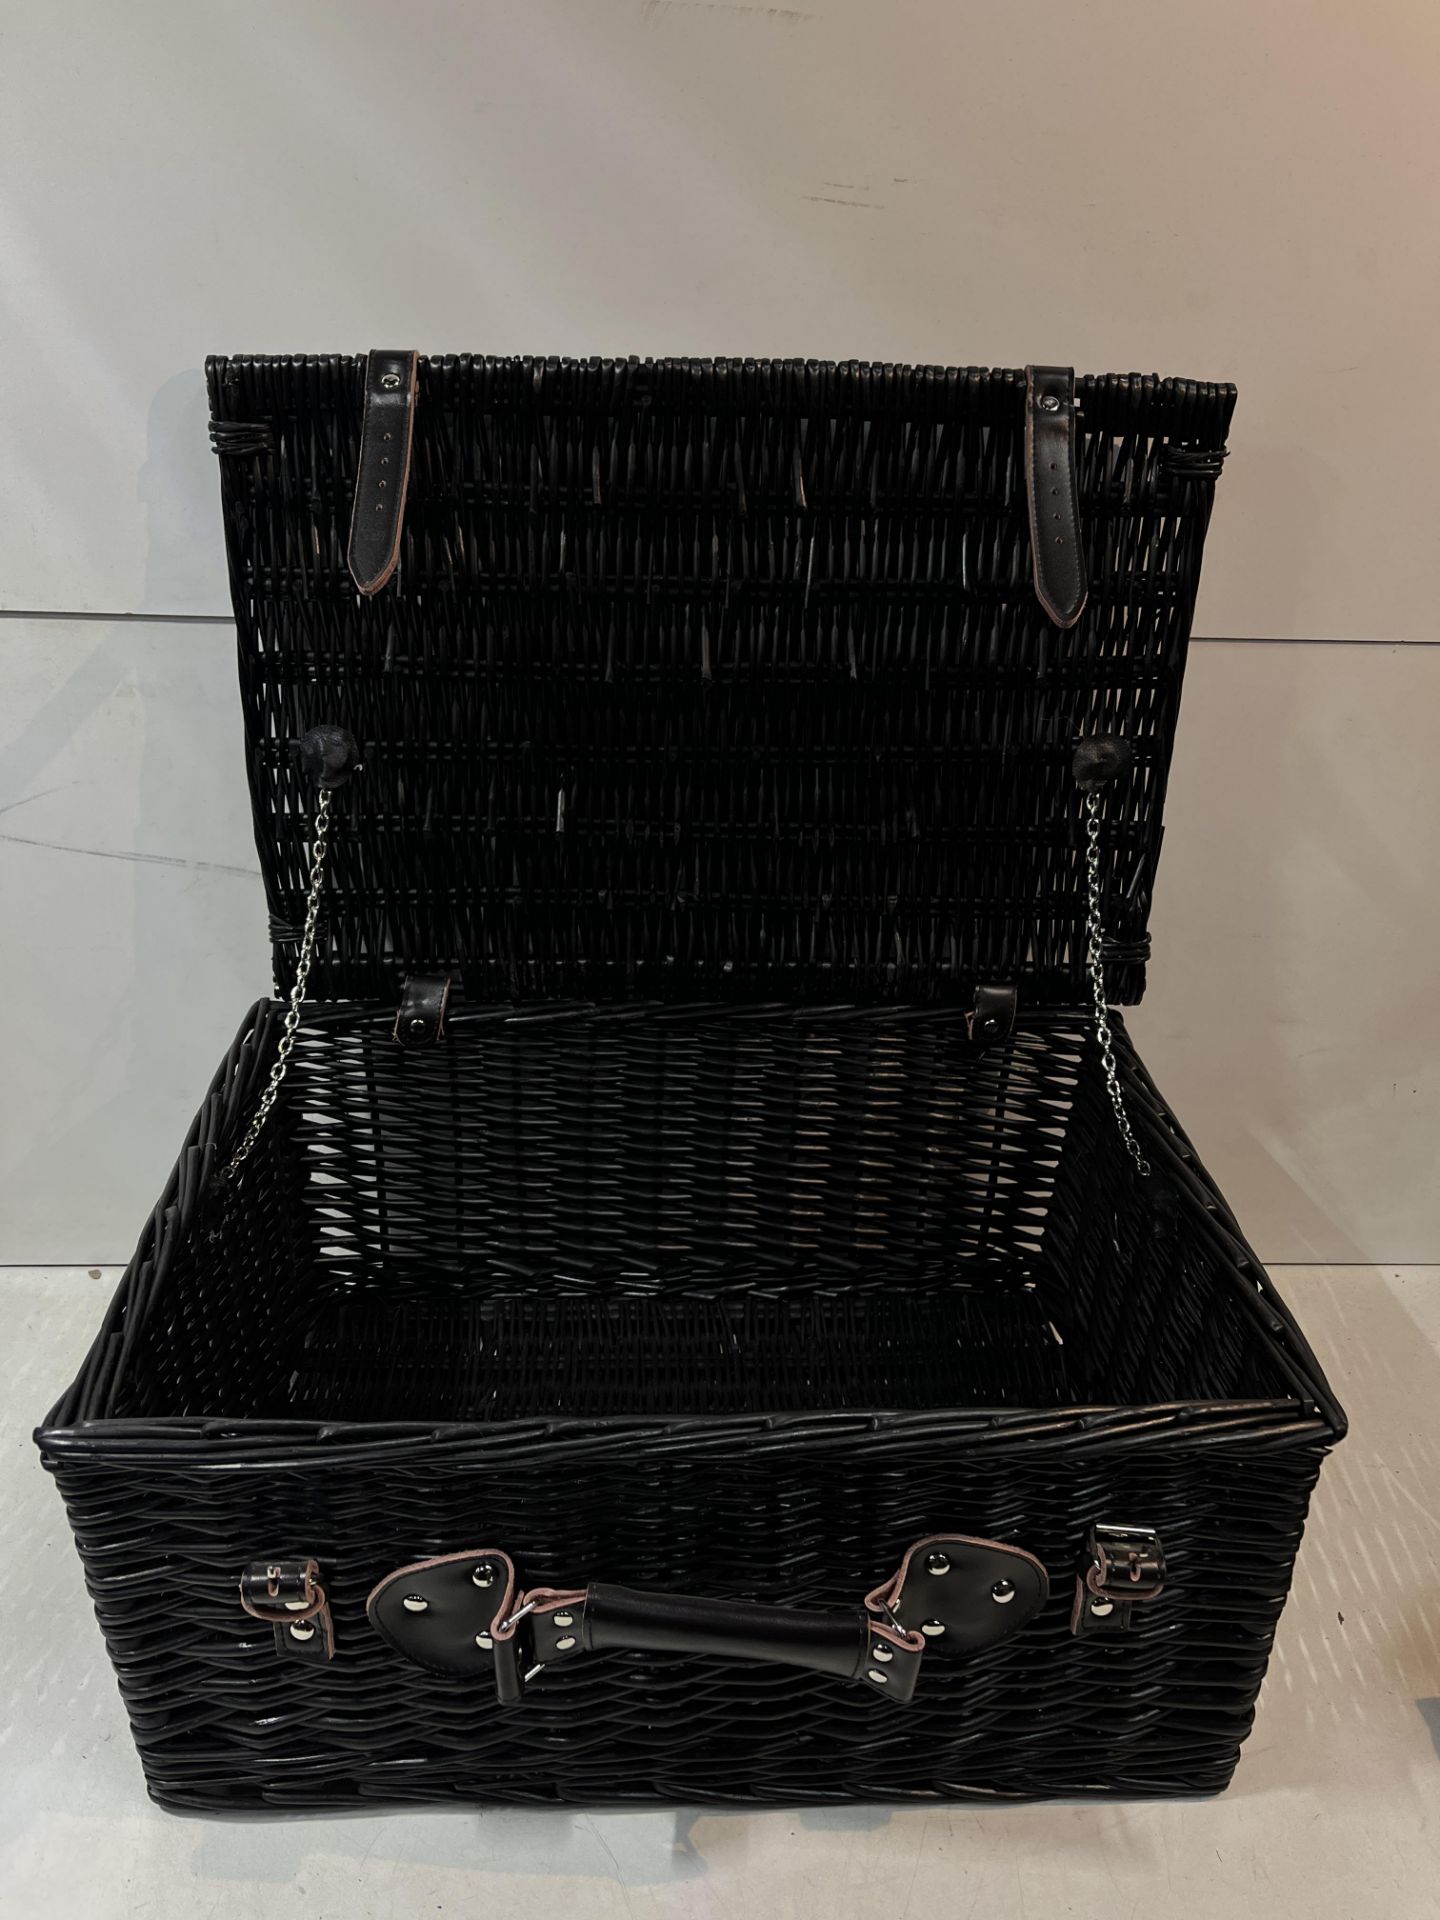 Pallet of Medium Black Gift Wicker Baskets - Image 2 of 5